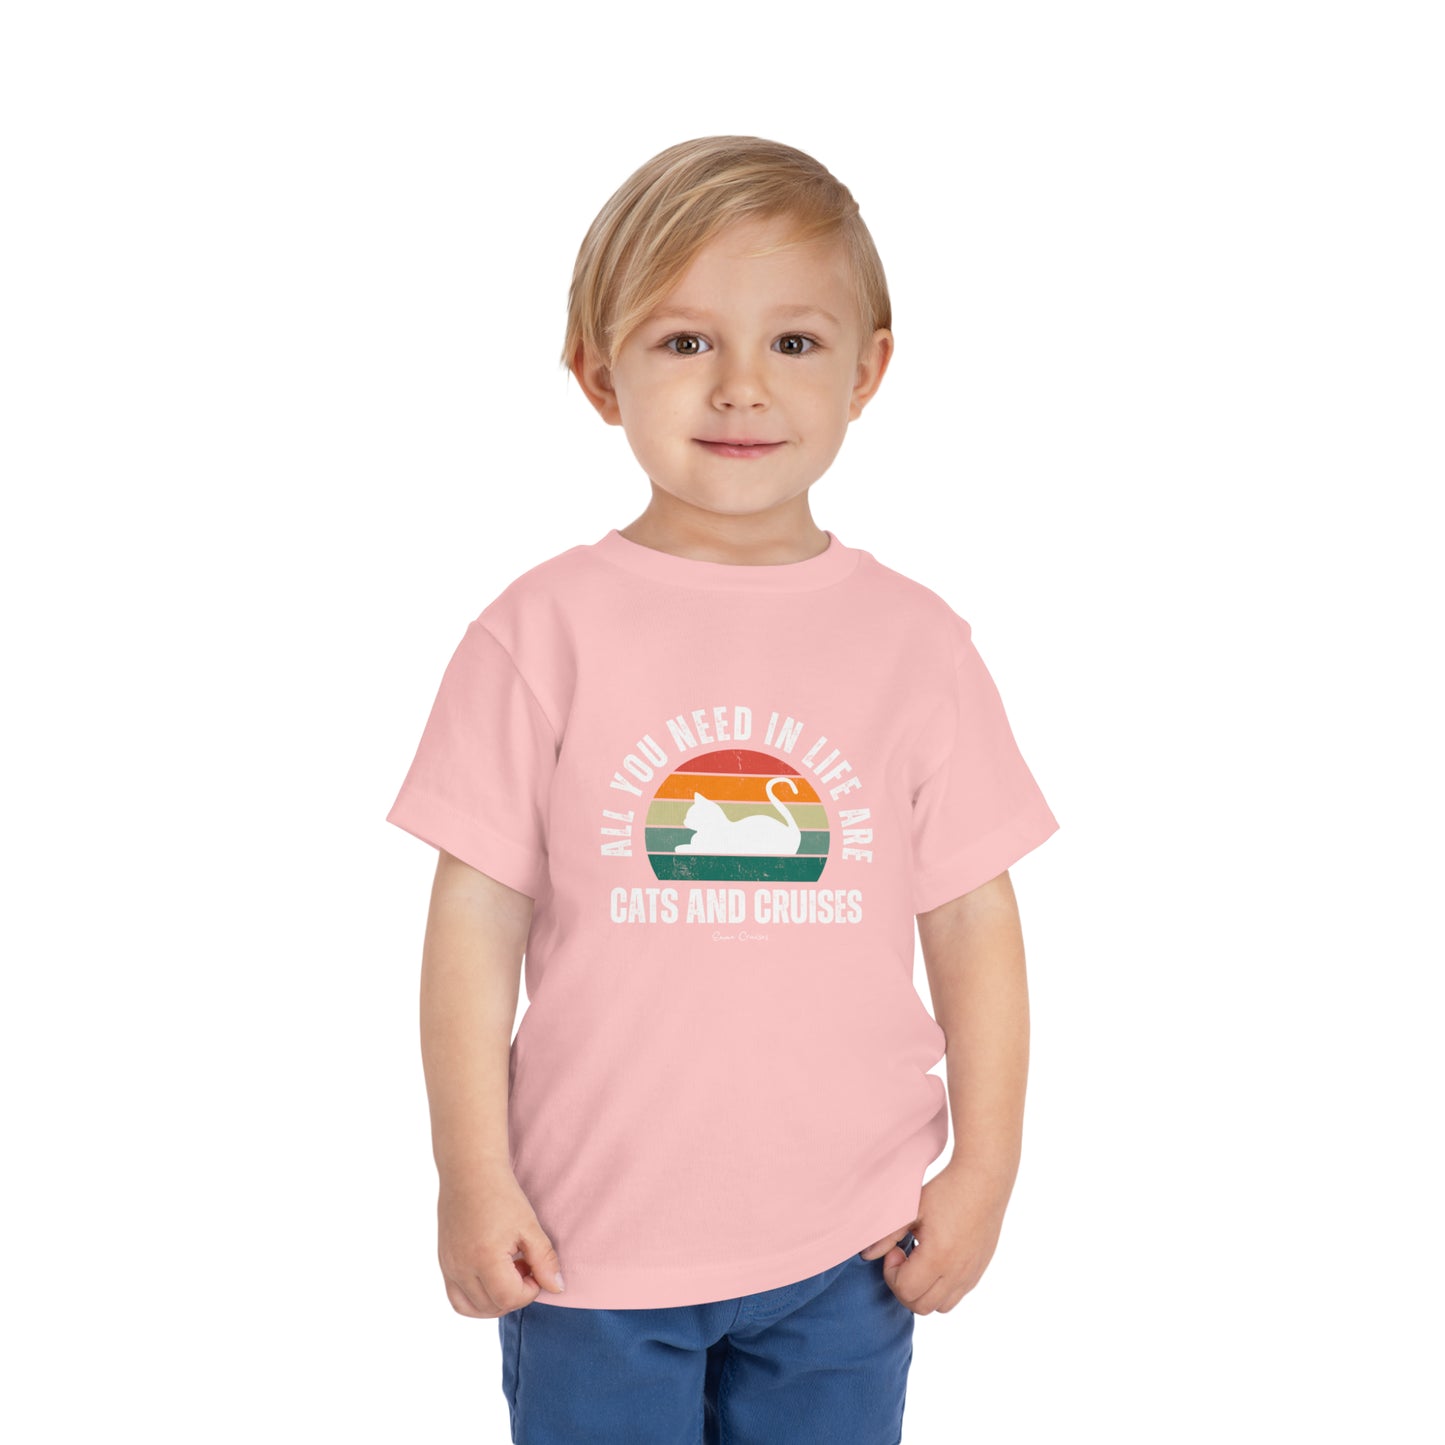 Gatos y cruceros - Camiseta UNISEX para niños pequeños 